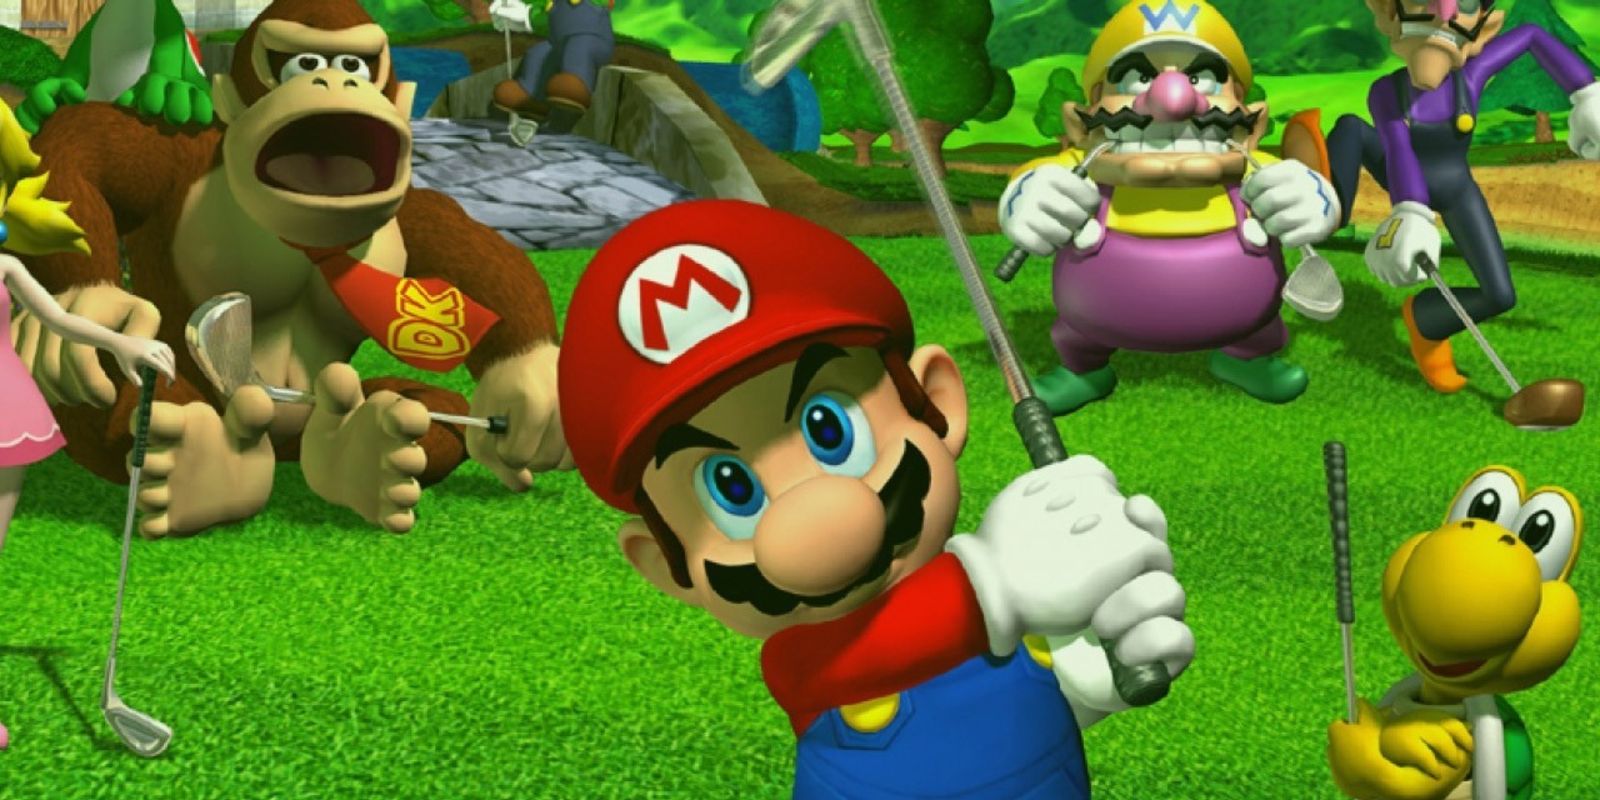 Donkey Kong, Wario, Waluigi, and Koopa reacting to Mario's hit in Mario Golf Advance Tour